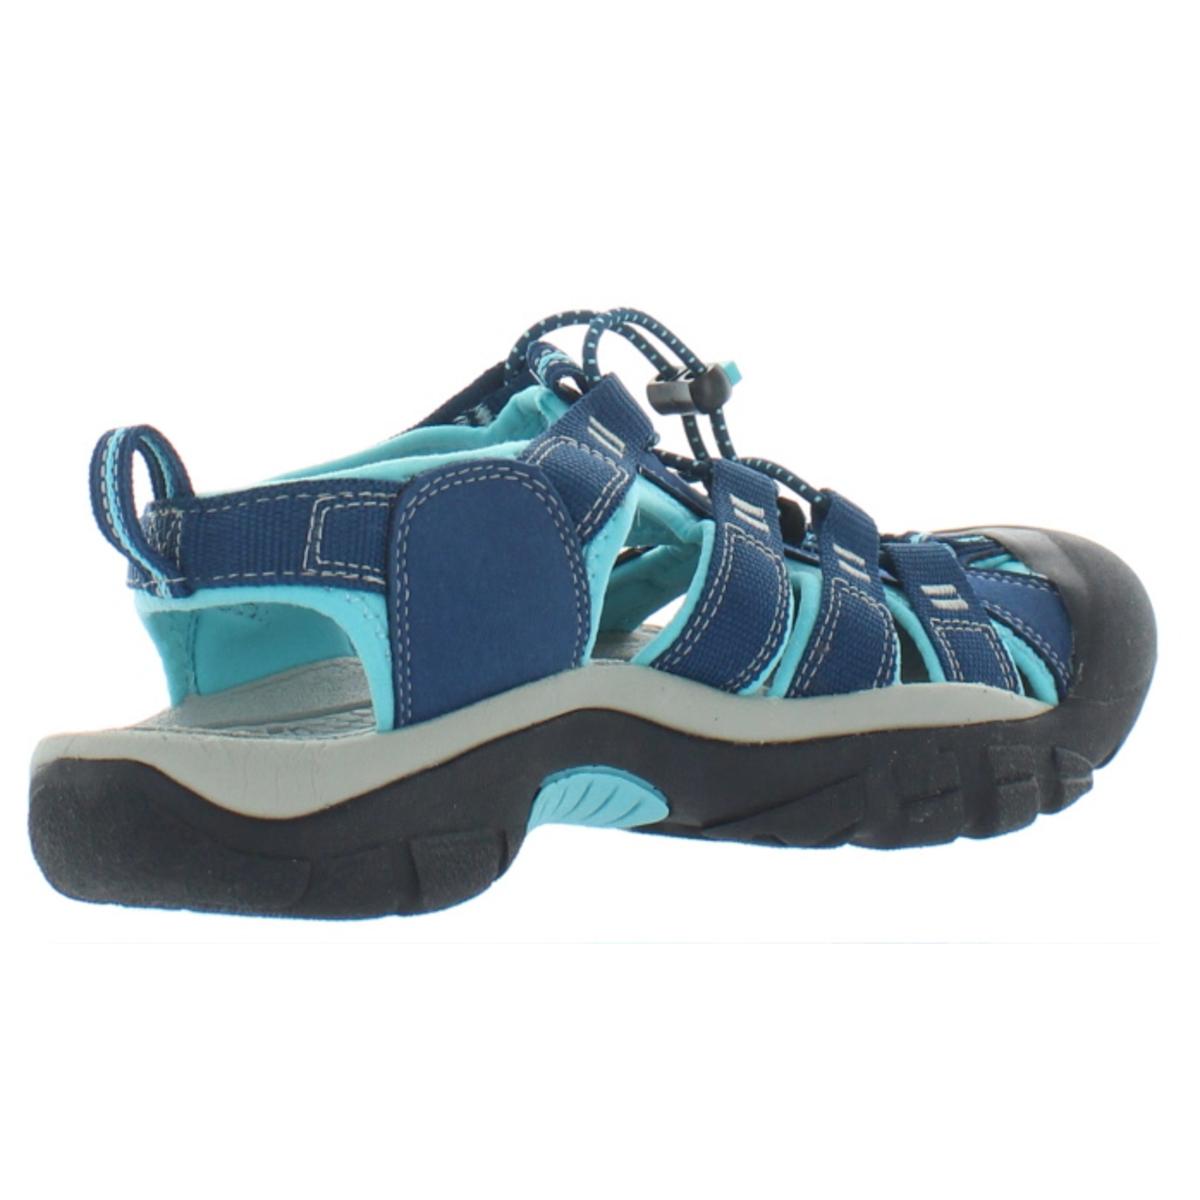 Keen Womens Blue Faux Leather Fisherman Sandals Shoes 7.5 Medium (B,M ...